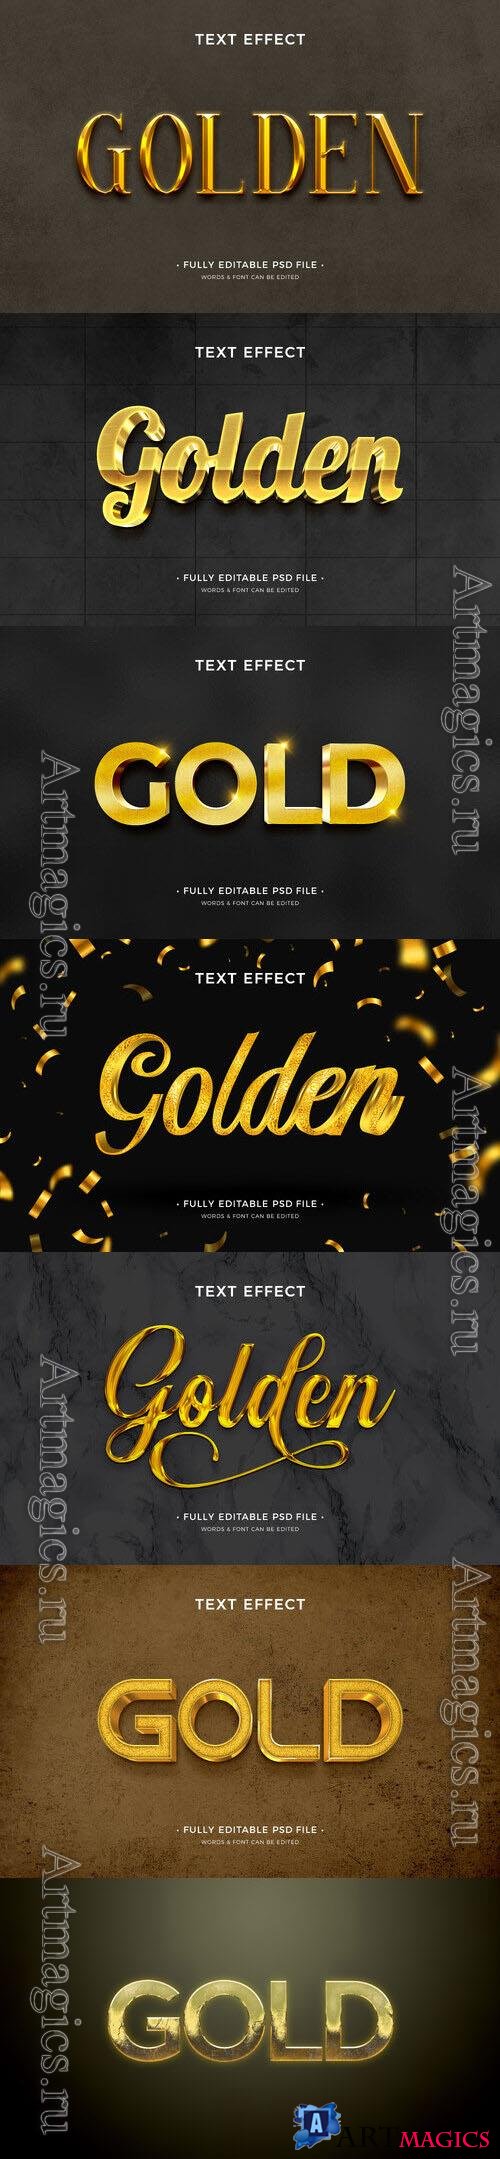 Psd style text effect editable set vol 436 